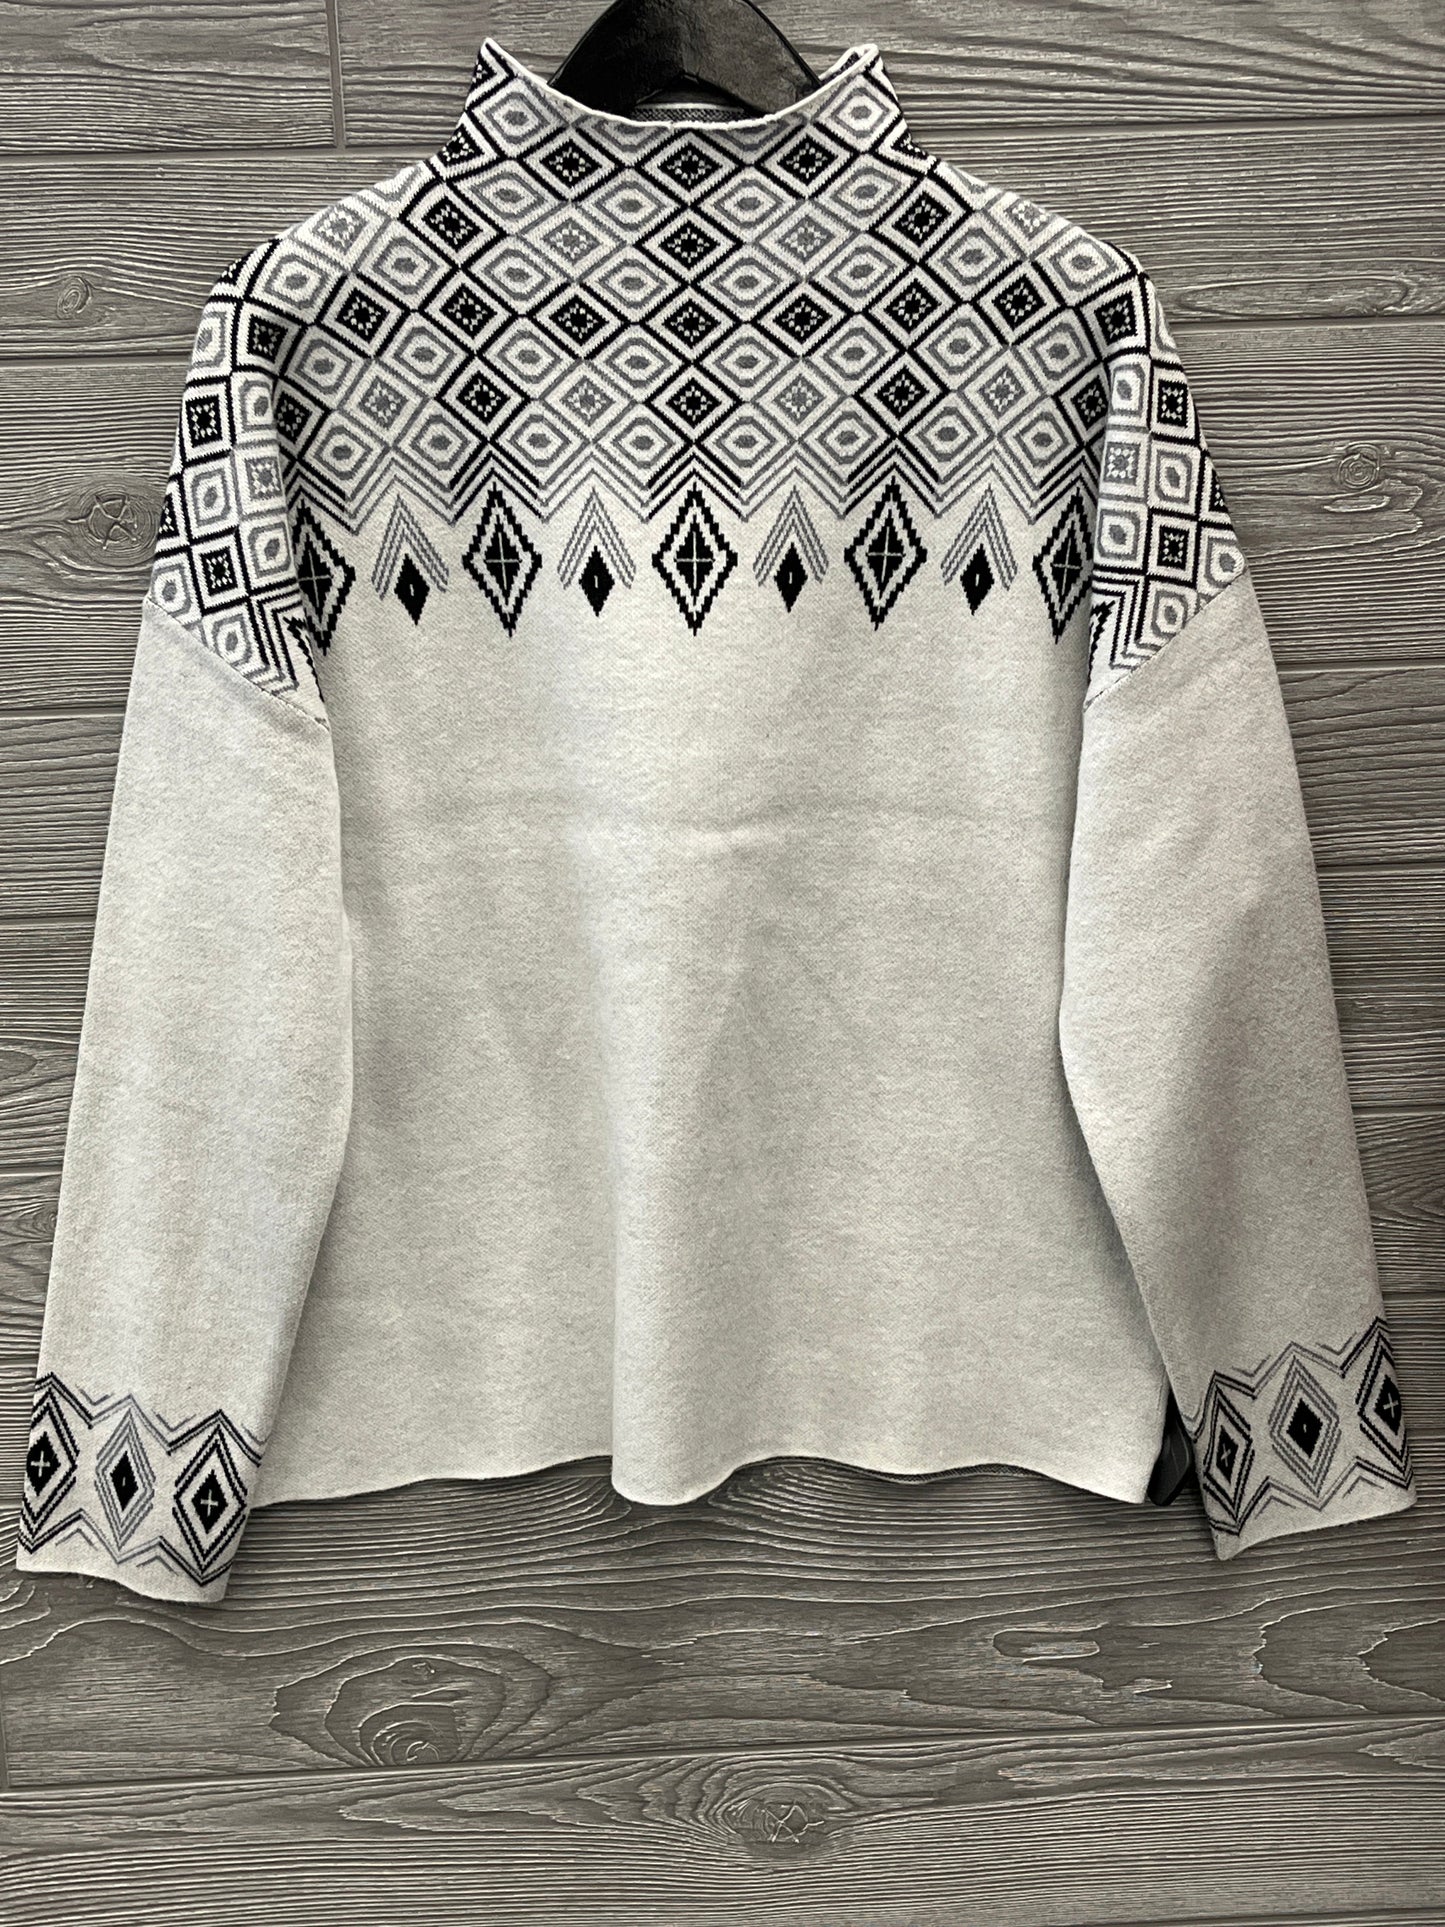 Sweater By Tahari  Size: Xl